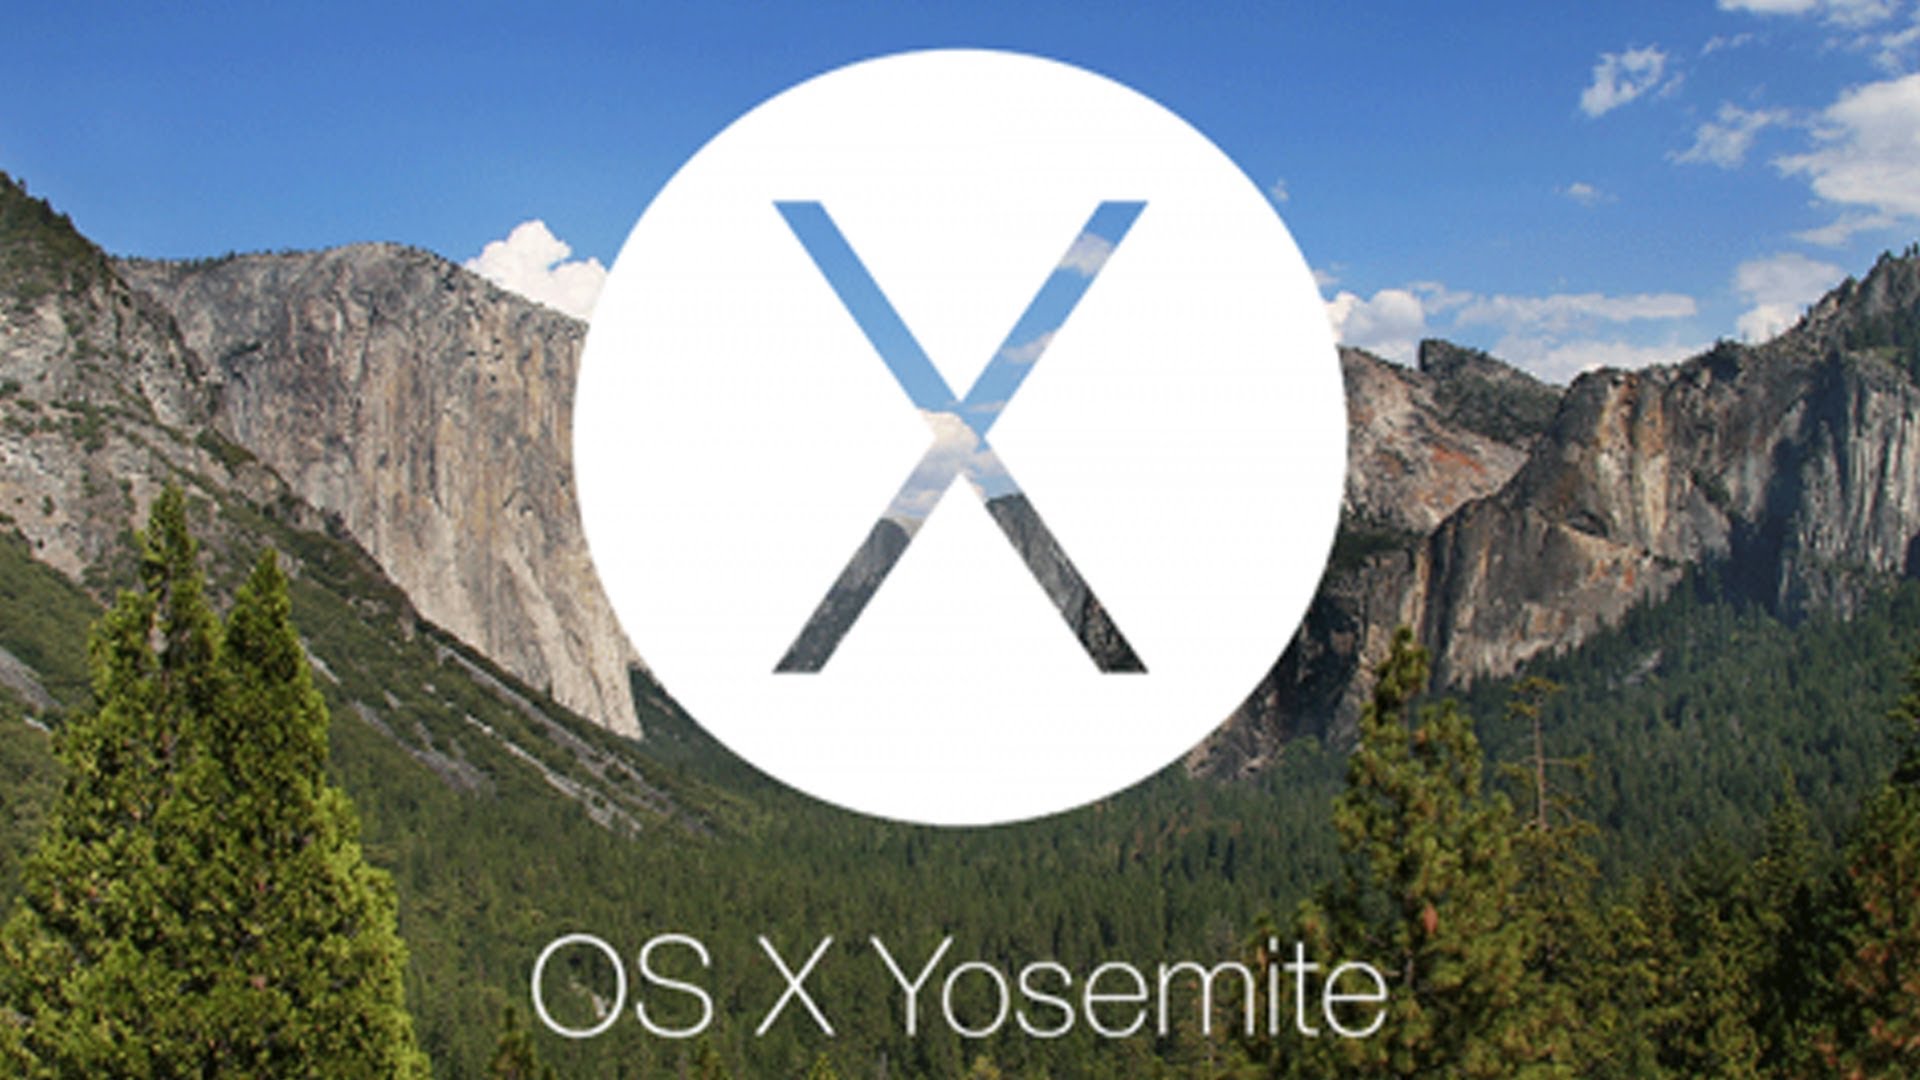 OS X Yosemite - WWDC 2014 Recap